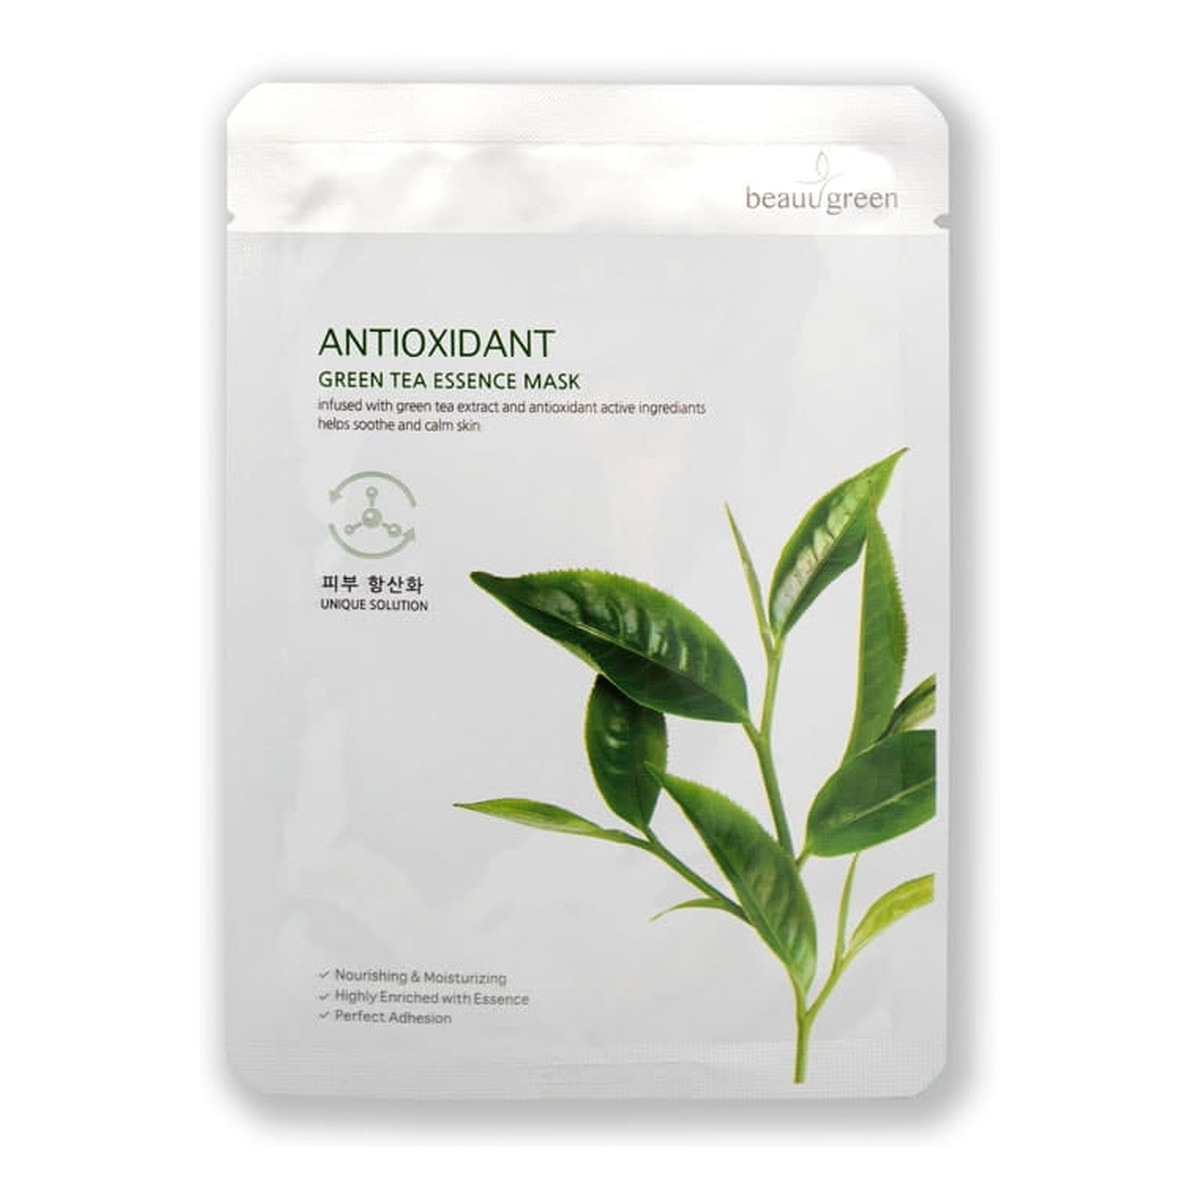 Beauugreen Antioxidant green tea essence mask antyoksydacyjna maseczka do twarzy zielona herbata 23g